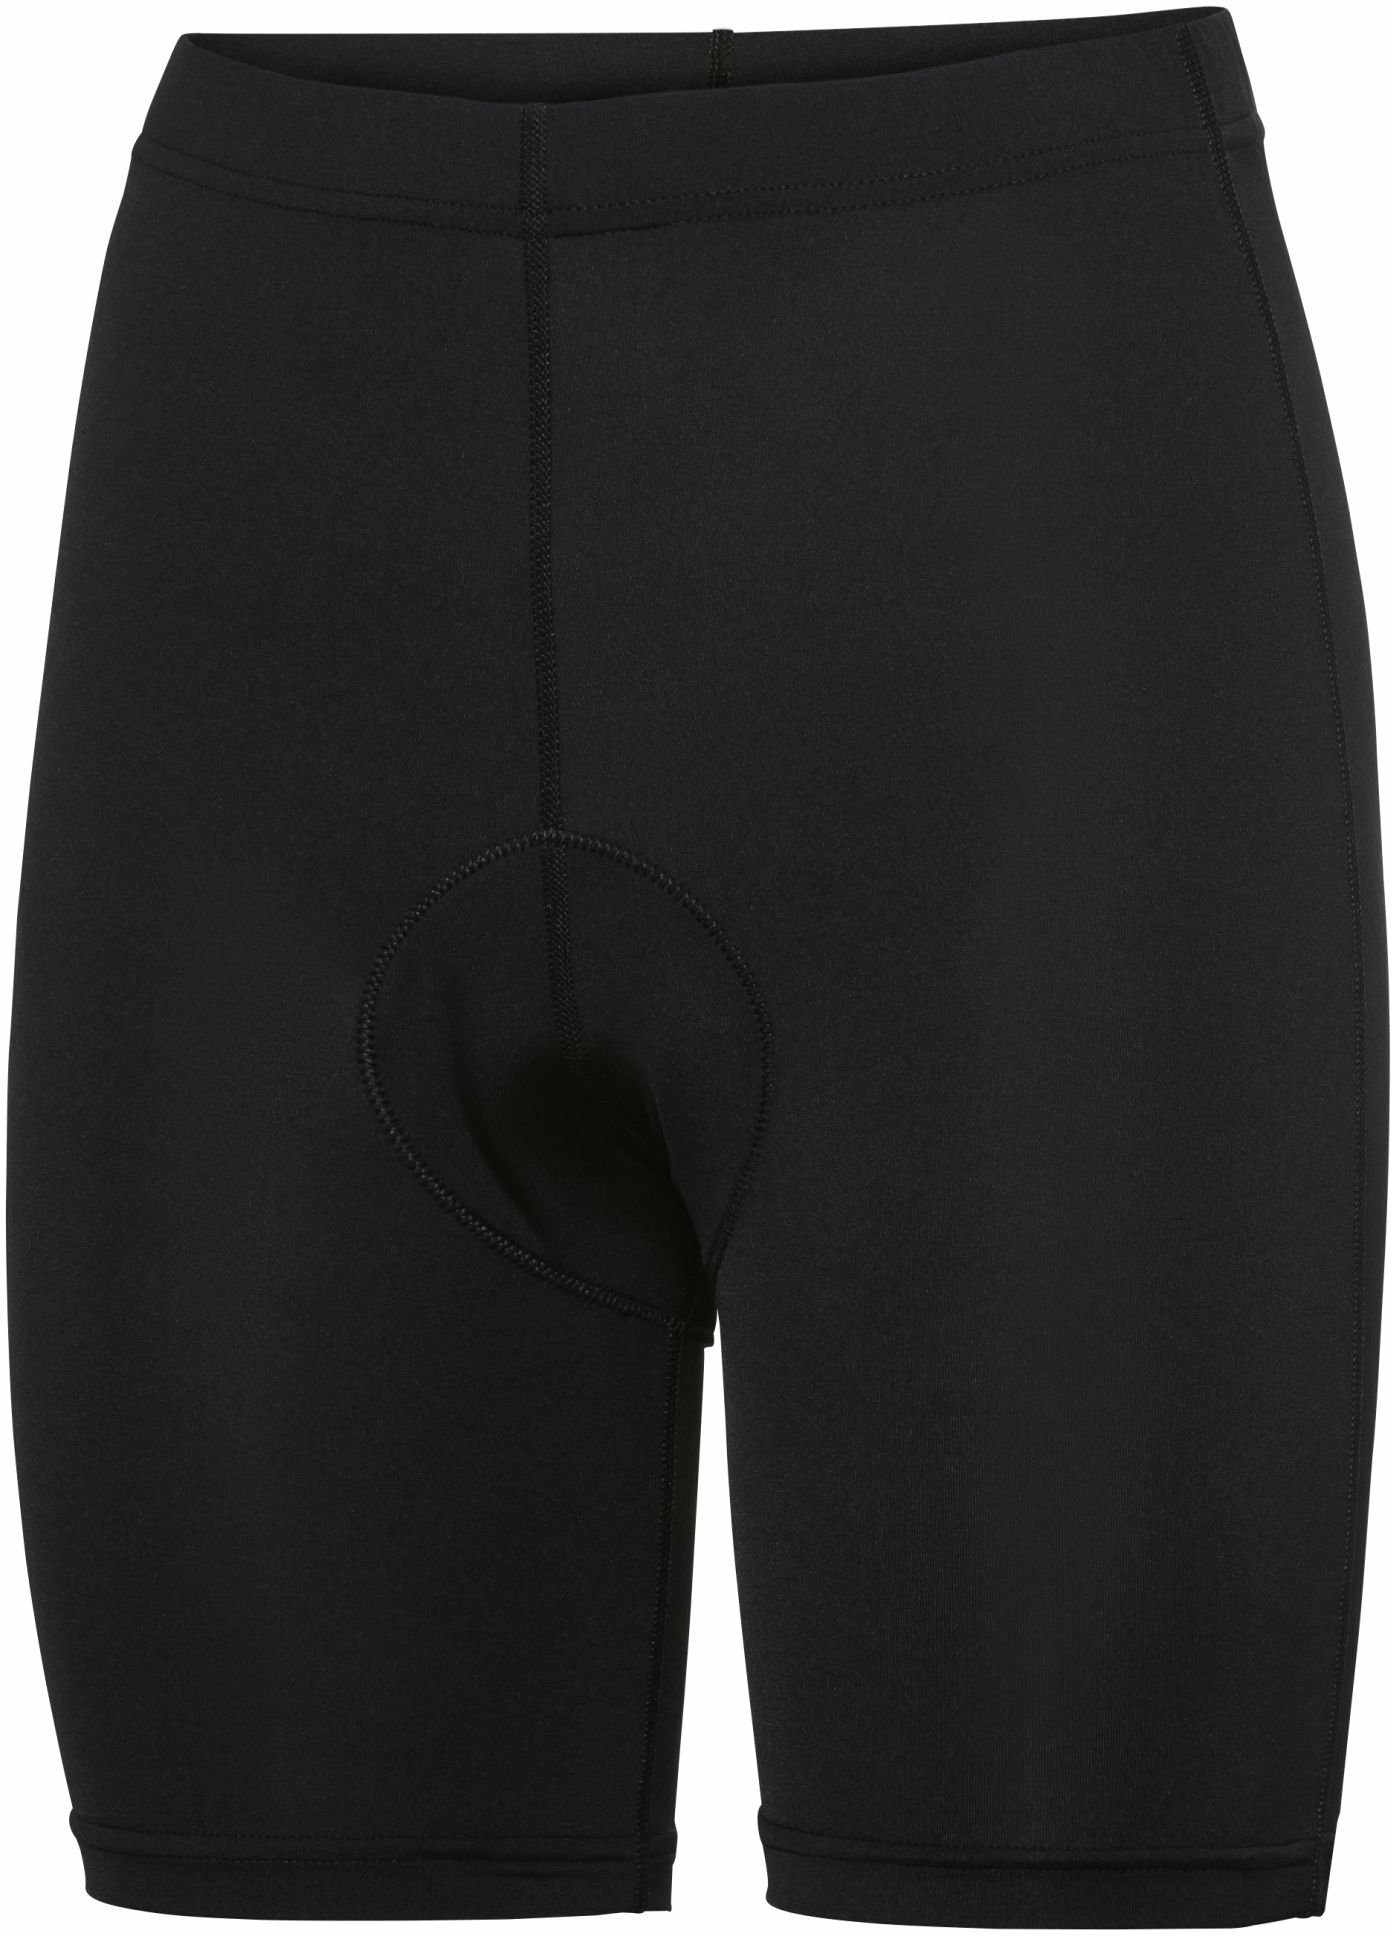 Bekleidung/Unterwäsche: Apura  Damen Unterhose Baselayer Shorts Pura S 